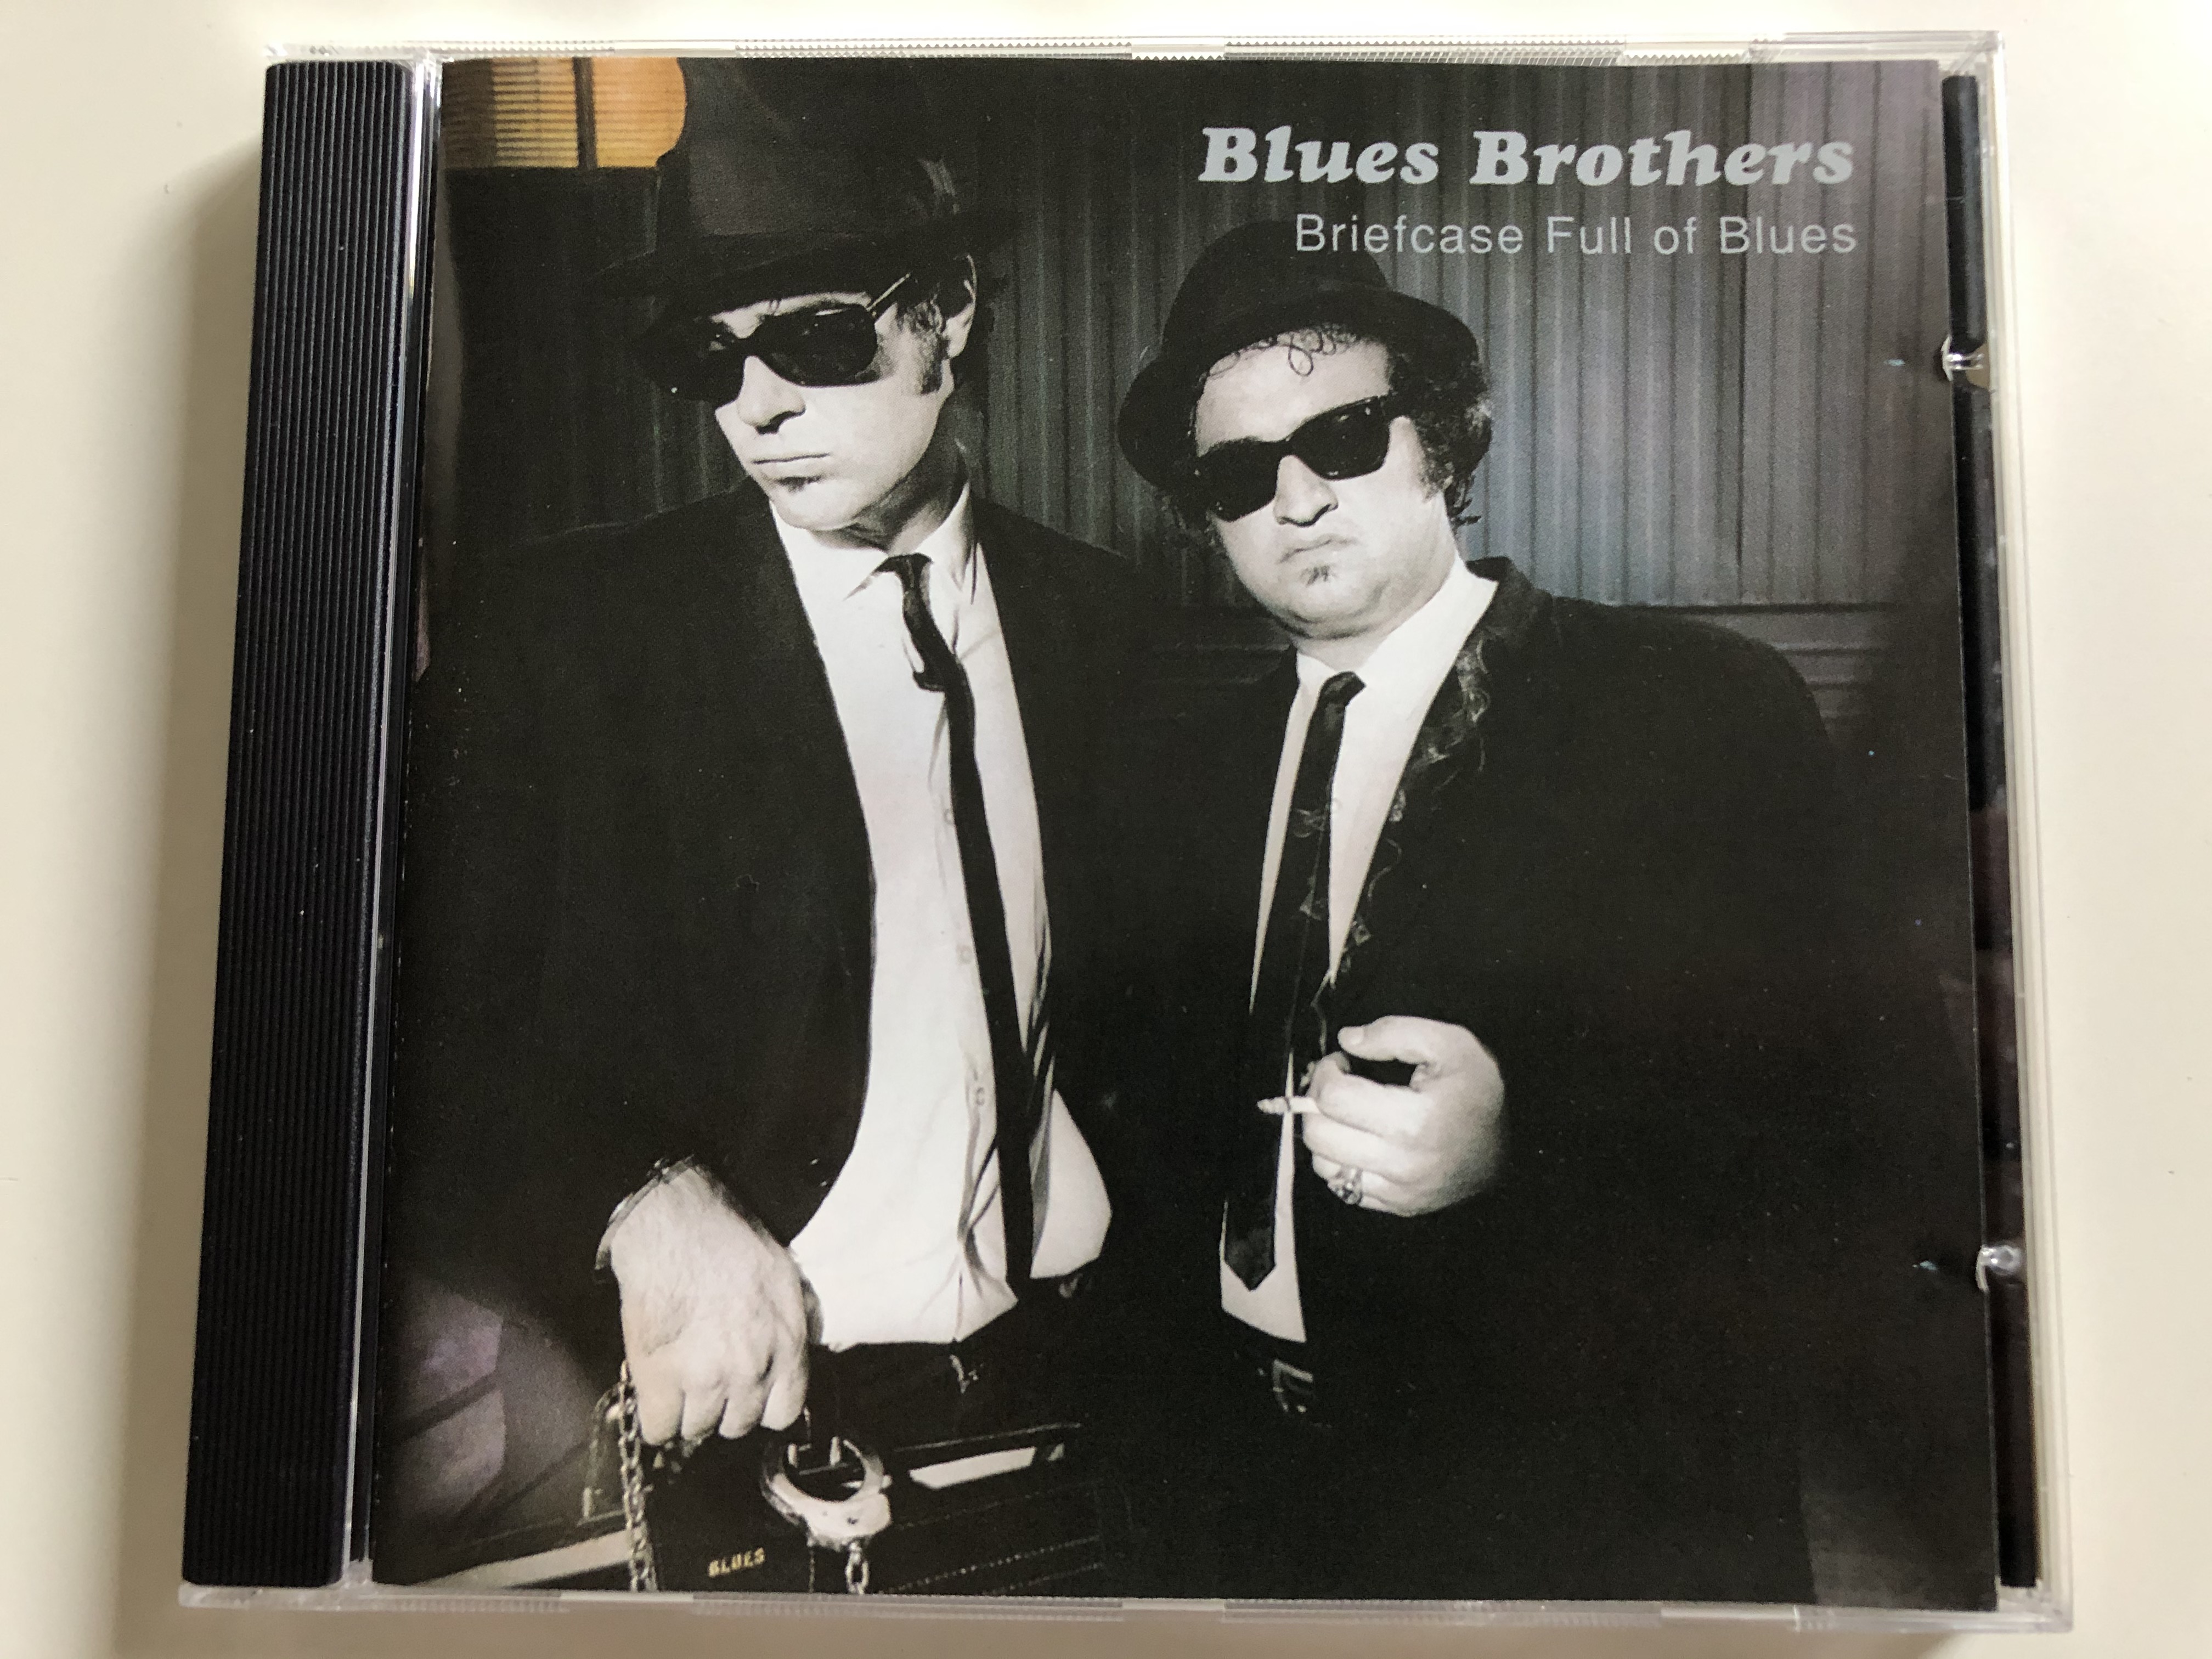 blues-brothers-briefcase-full-of-blues-atlantic-audio-cd-7567-82788-2-1-.jpg